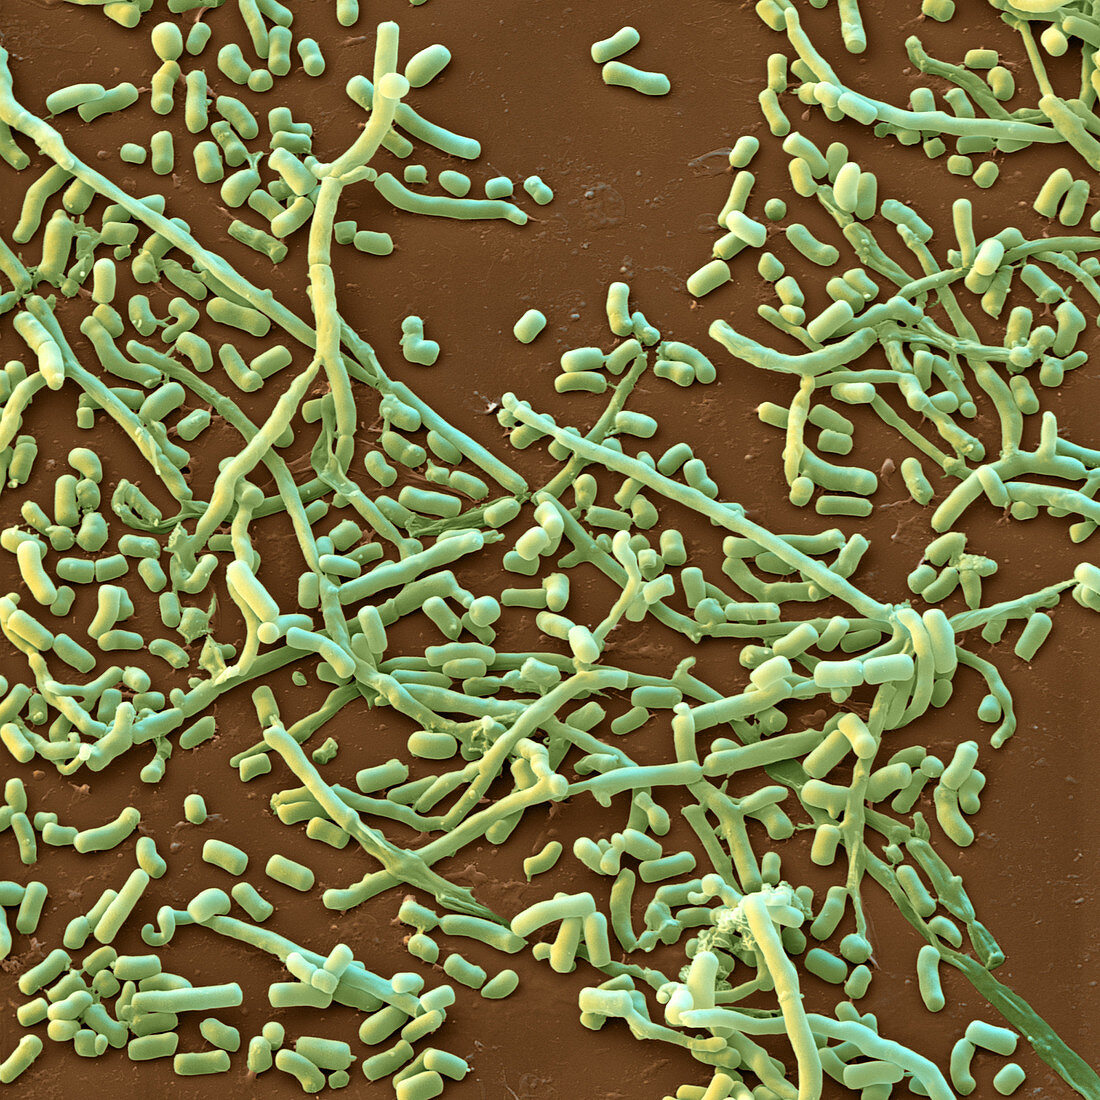 Streptomyces bacteria, SEM